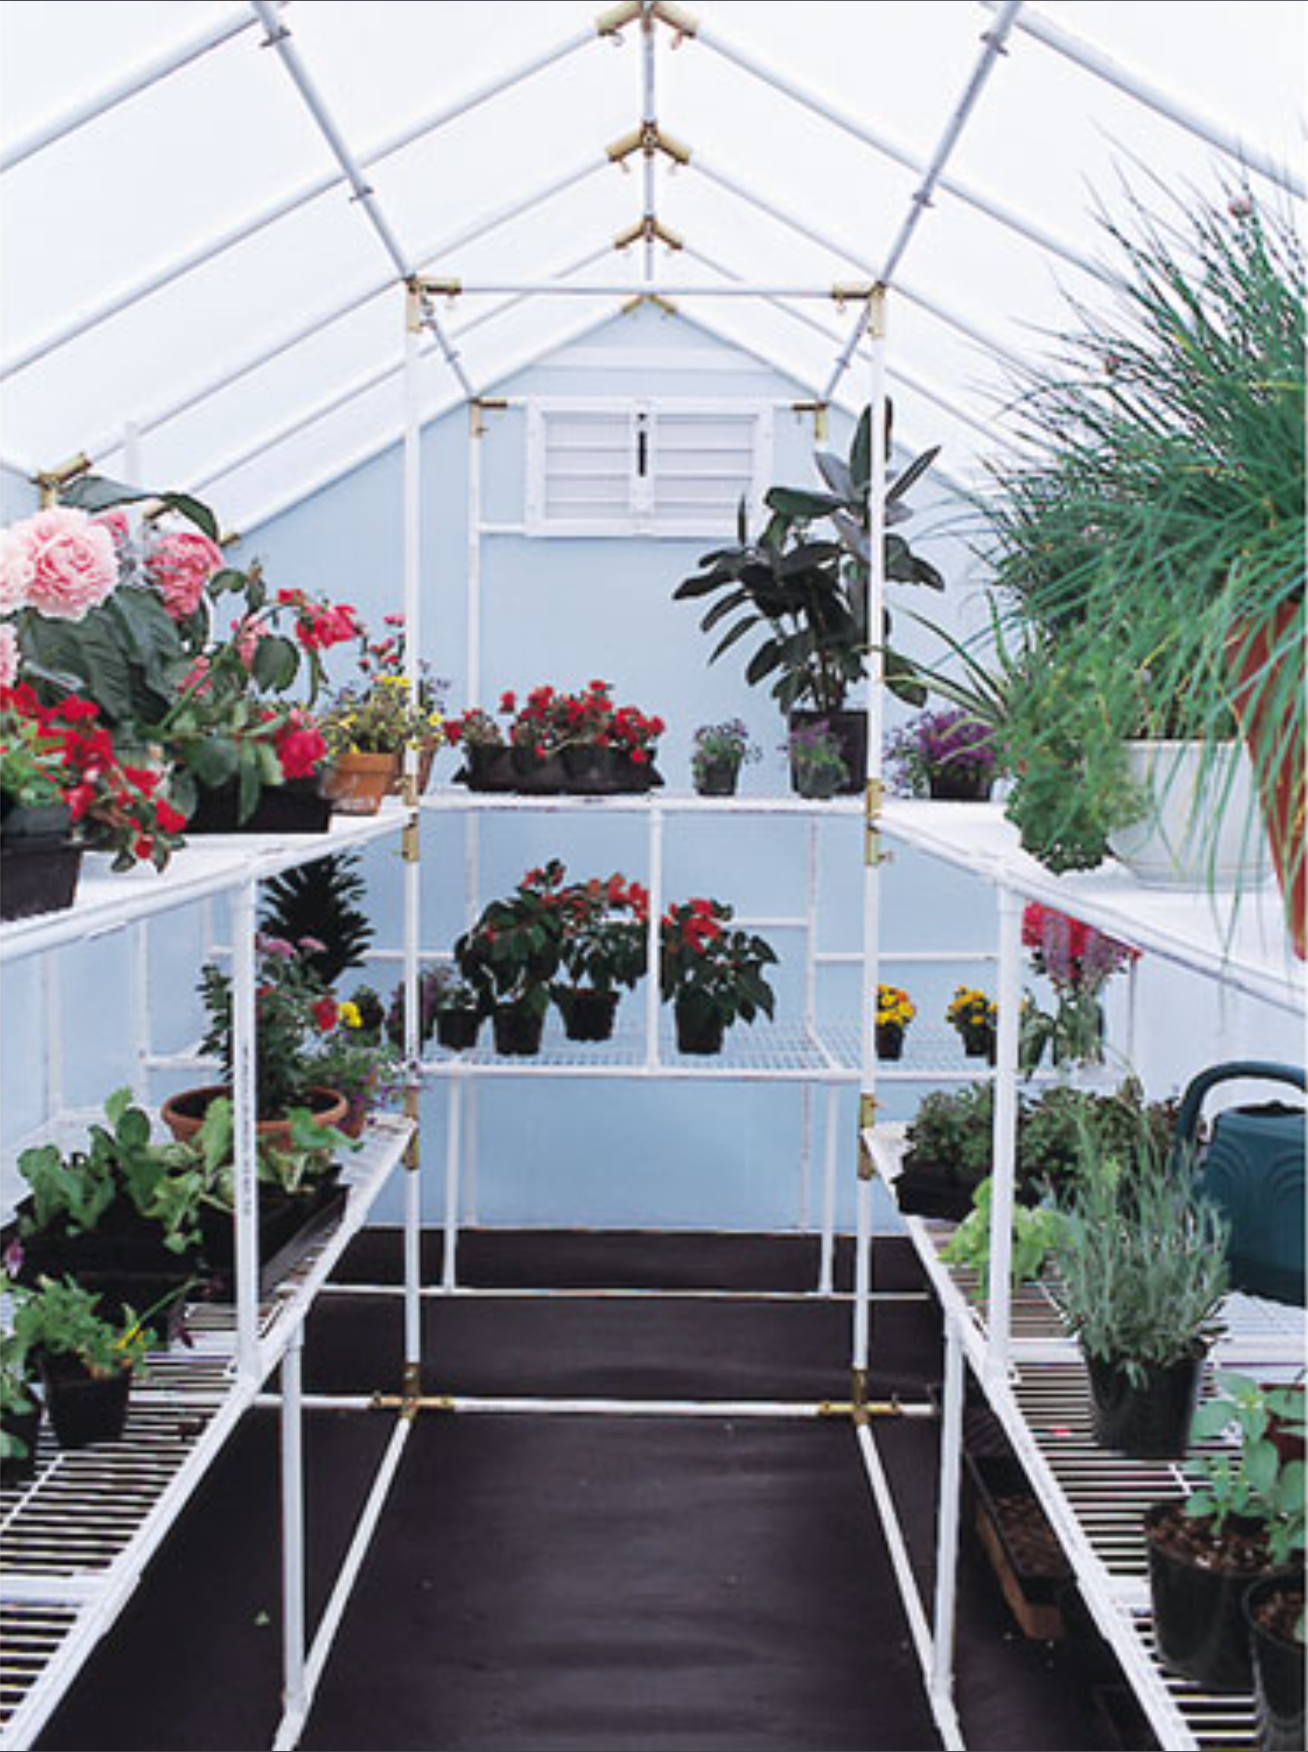 Solexx | Garden Master Greenhouse Kit With High Performance Greenhouse Plastic